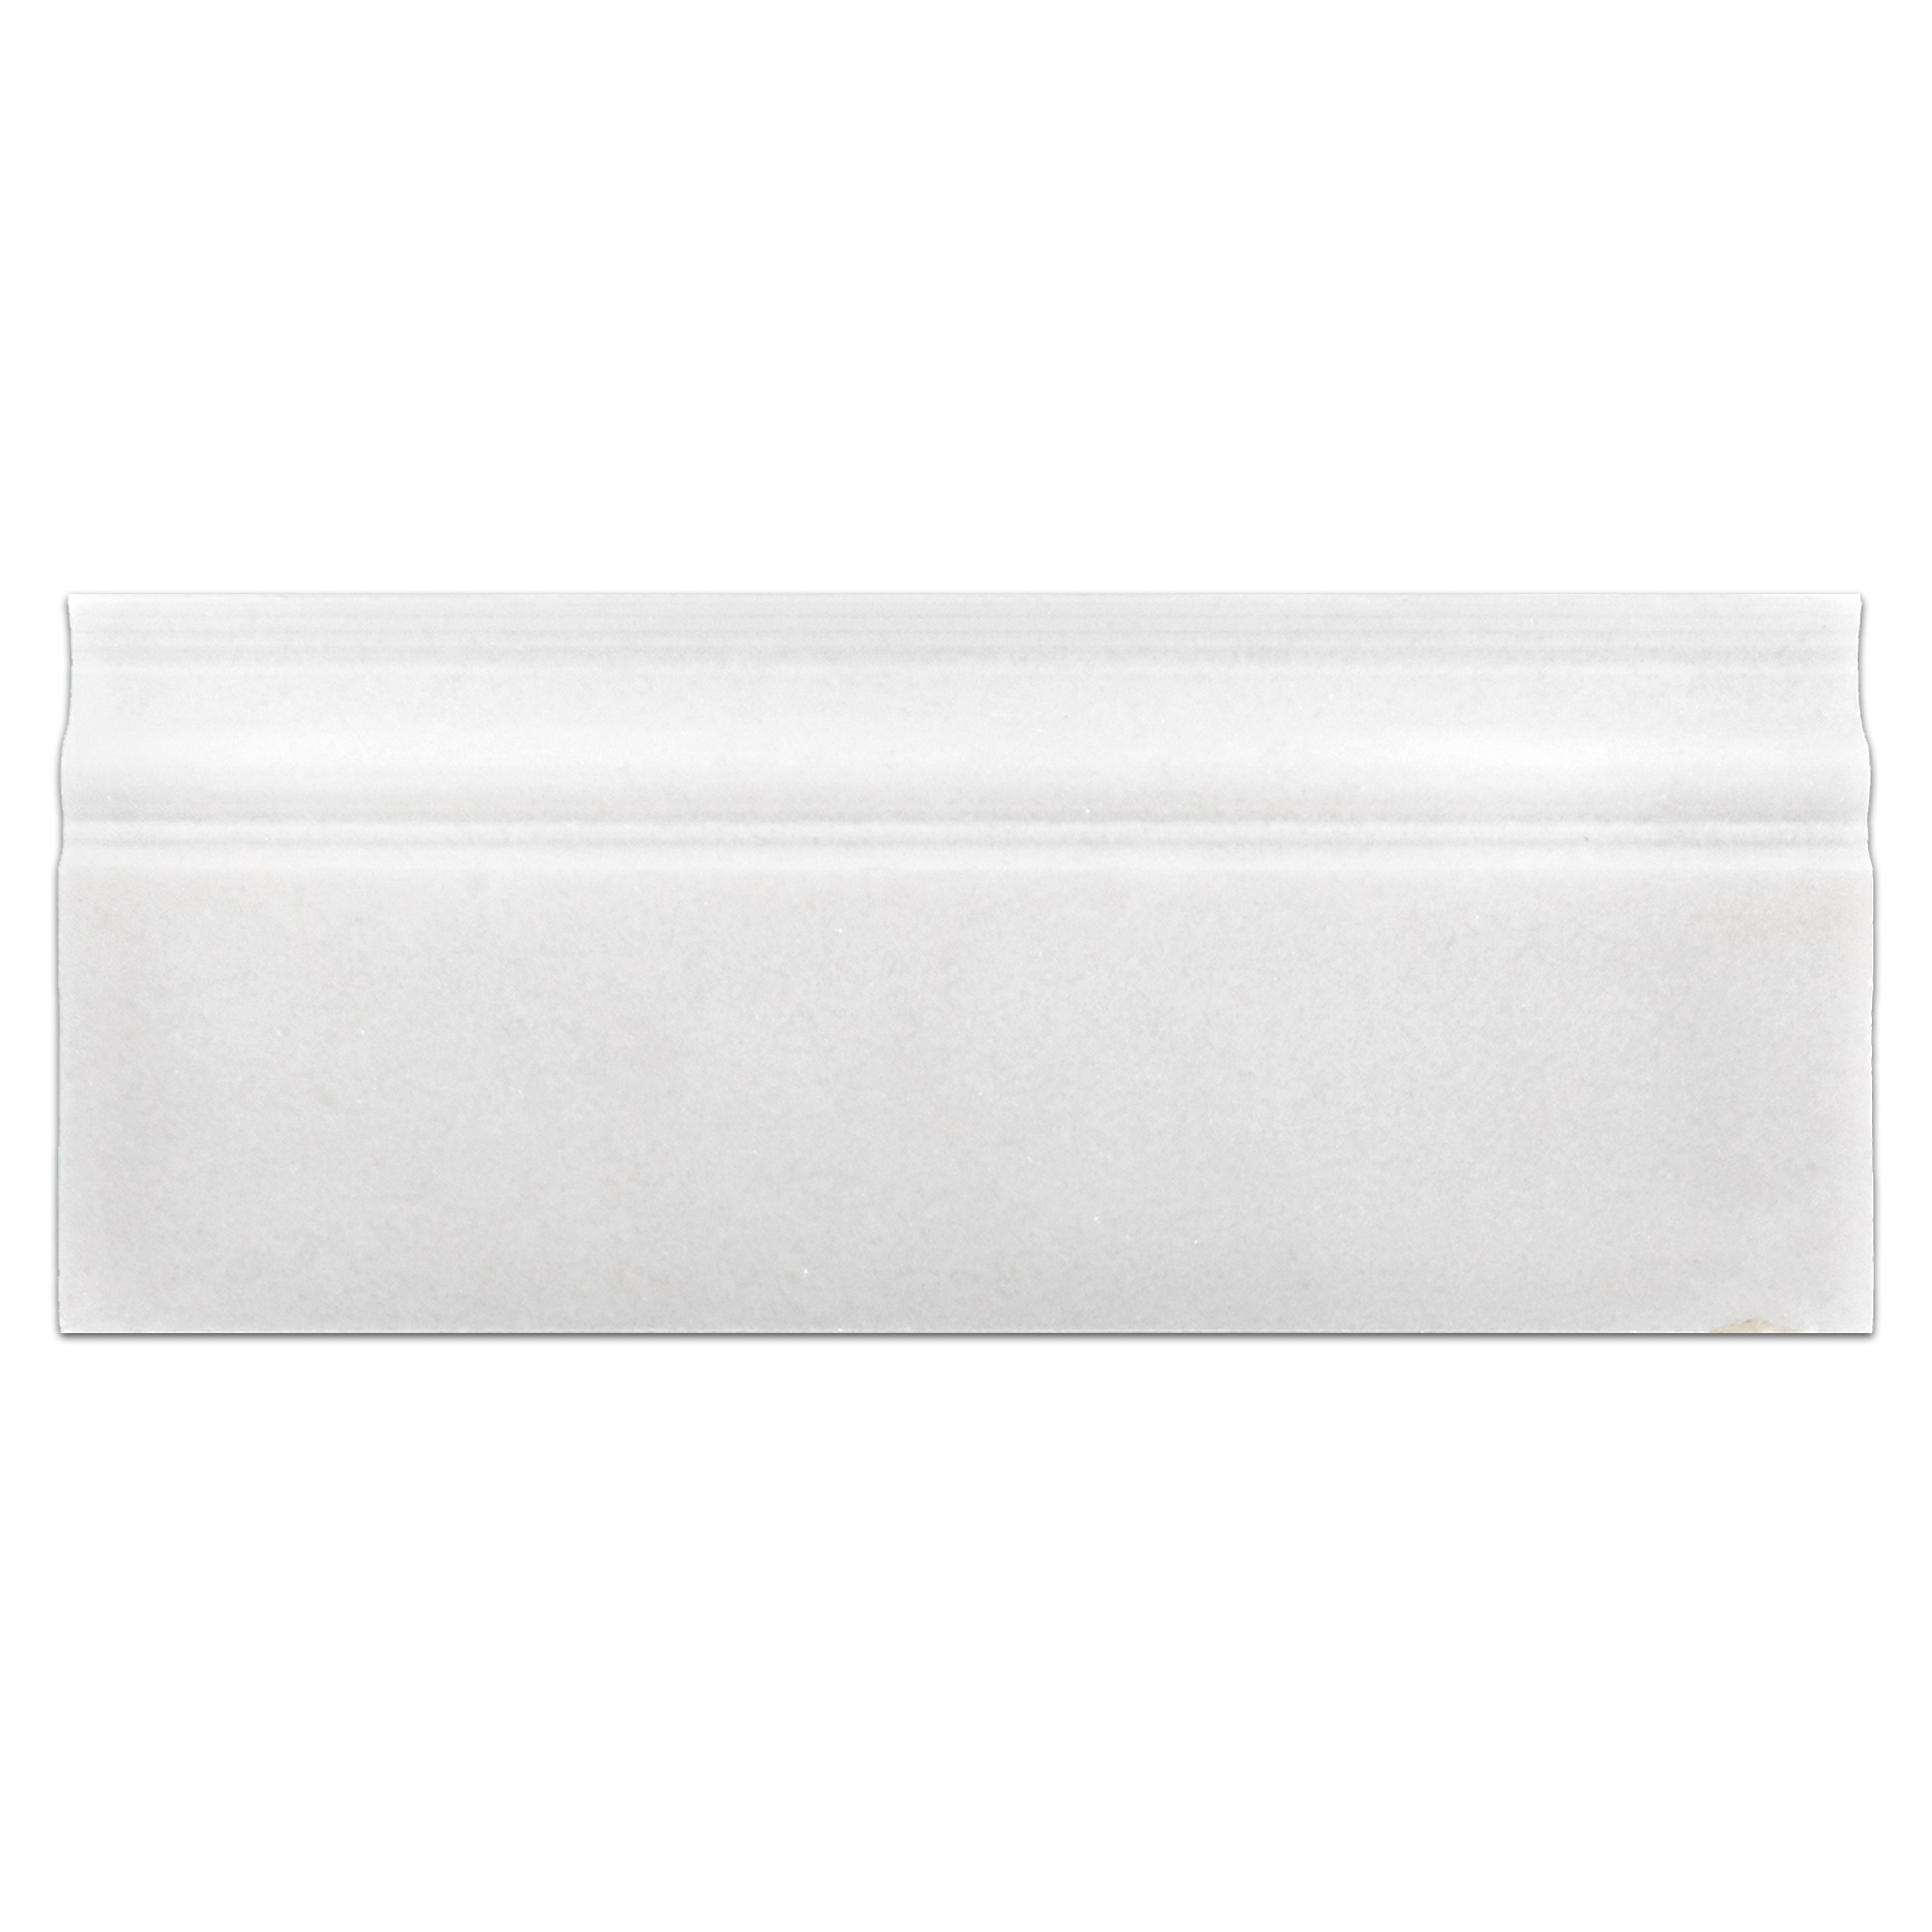 Elon White Thassos Marble Baseboard 4.75x12 Polished - Surface Group International Product